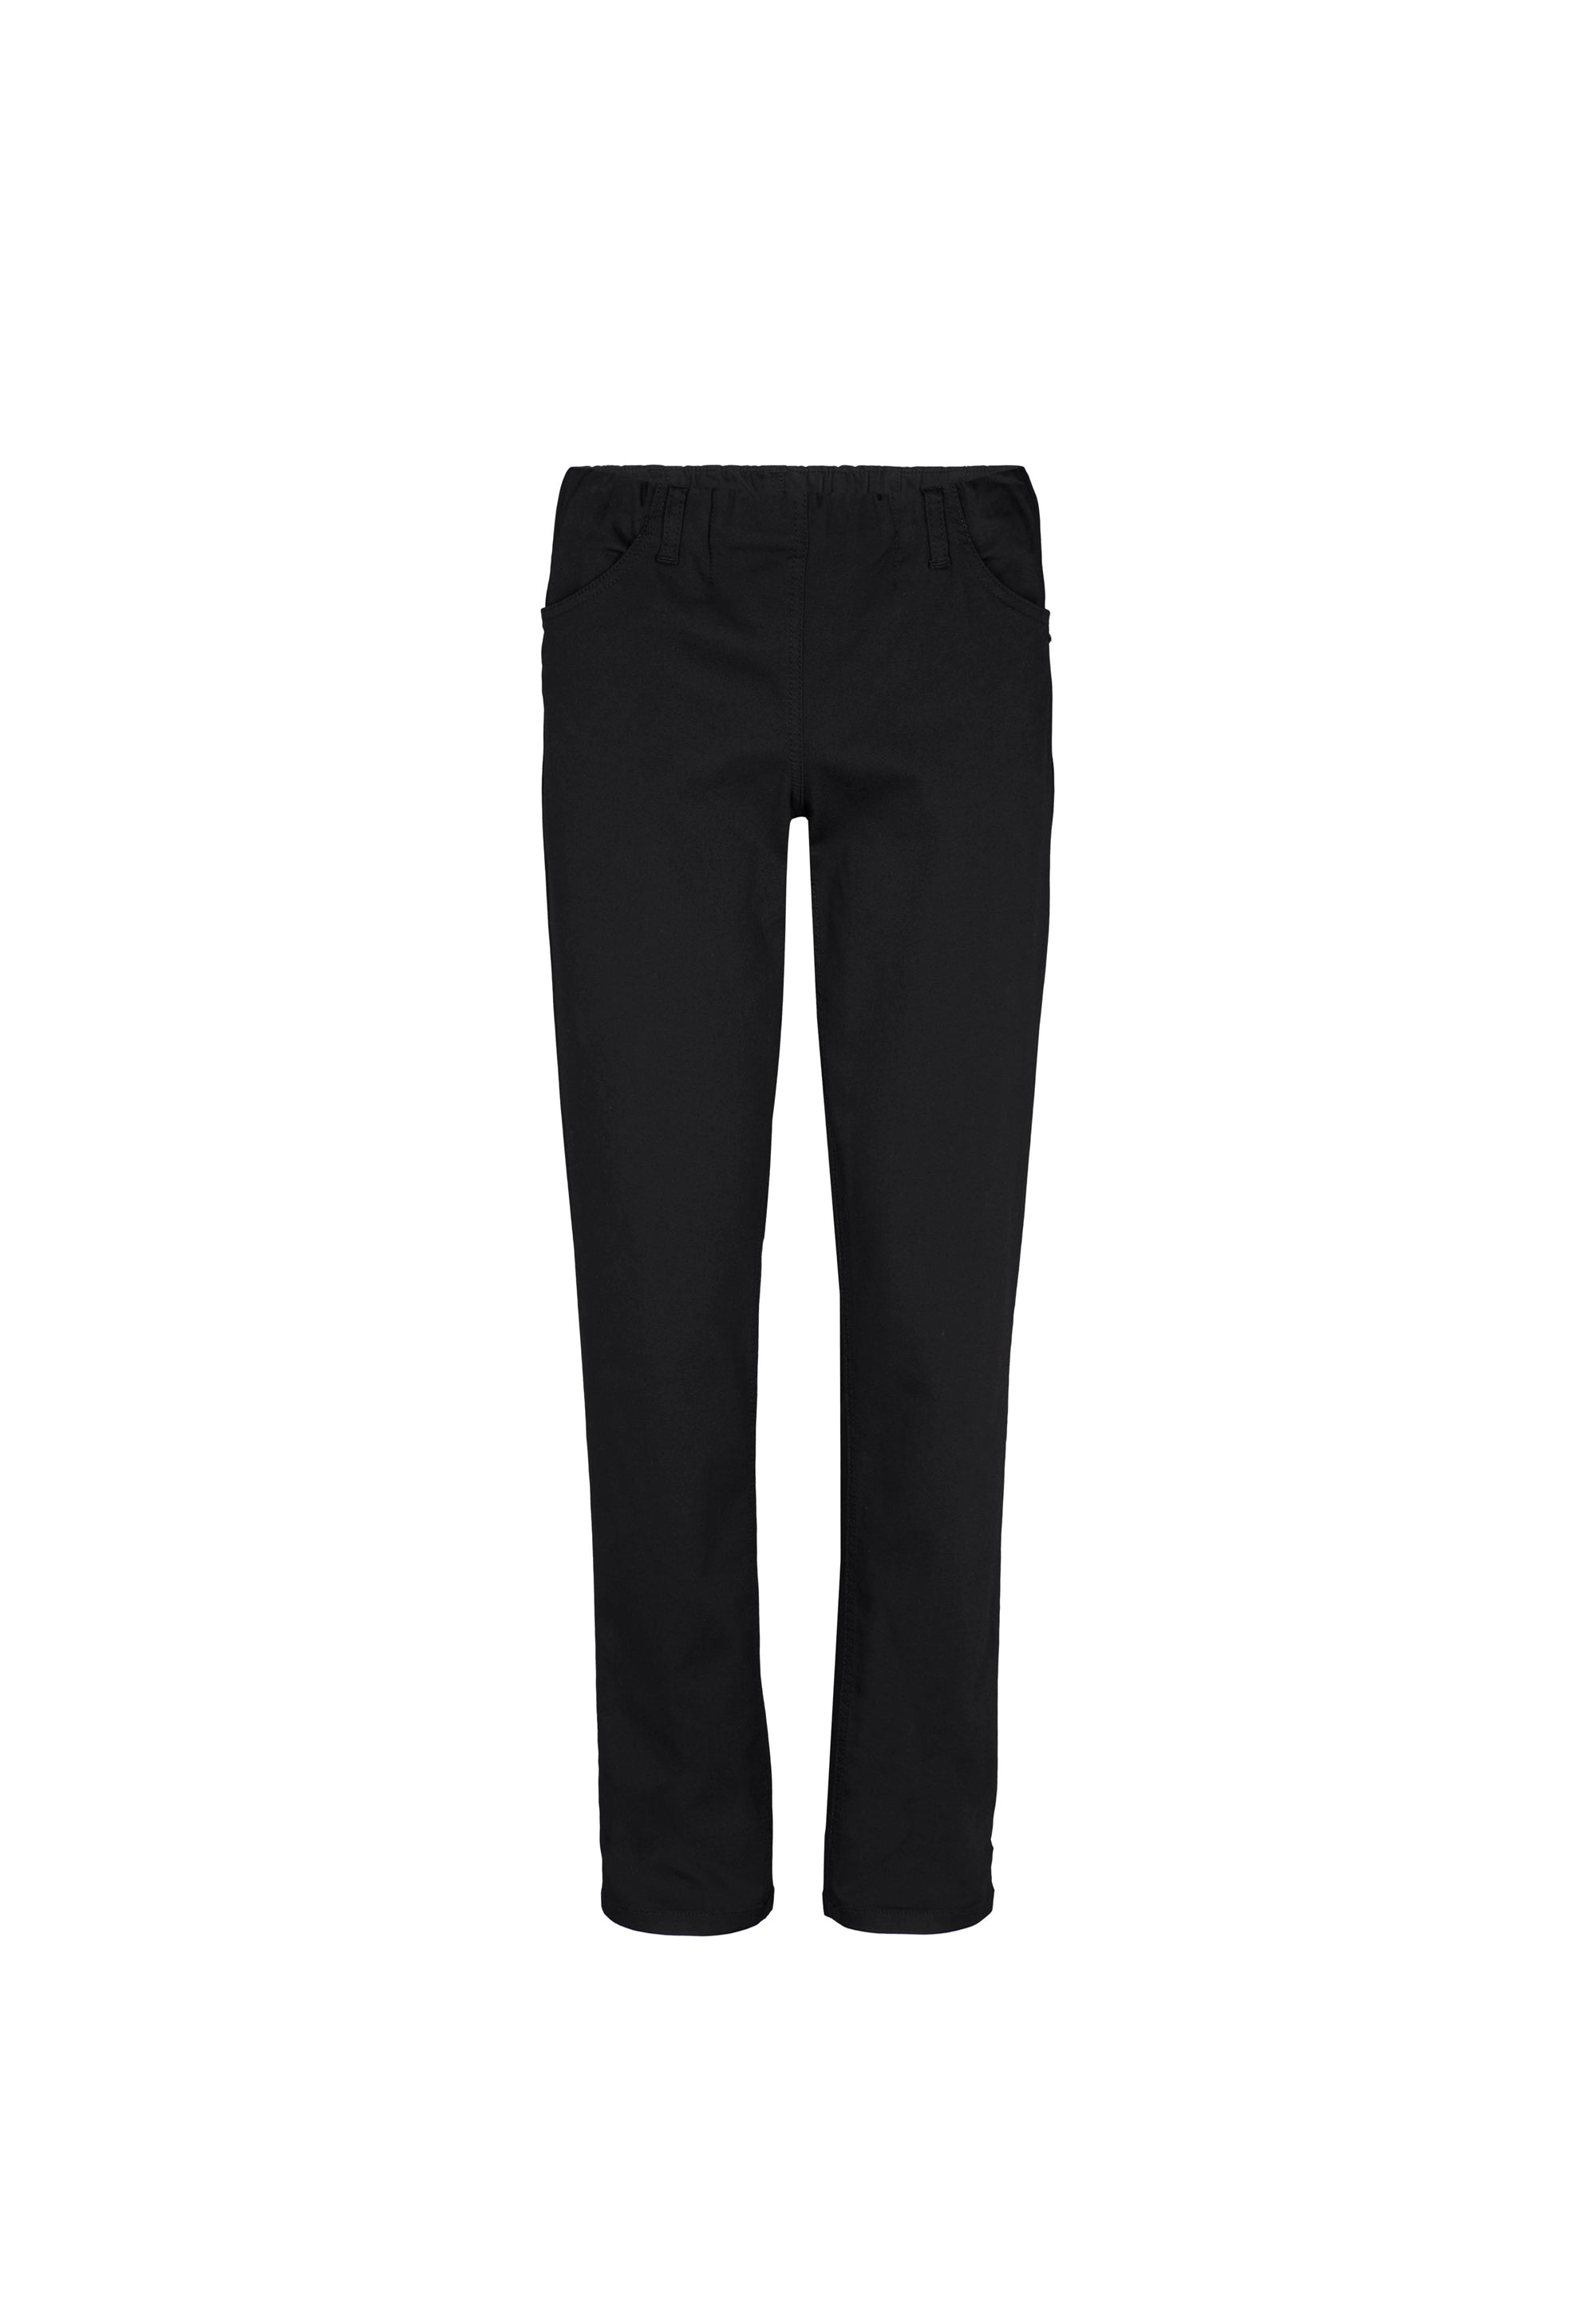 LAURIE Kelly Regular - Long Length Trousers REGULAR 99000 Black